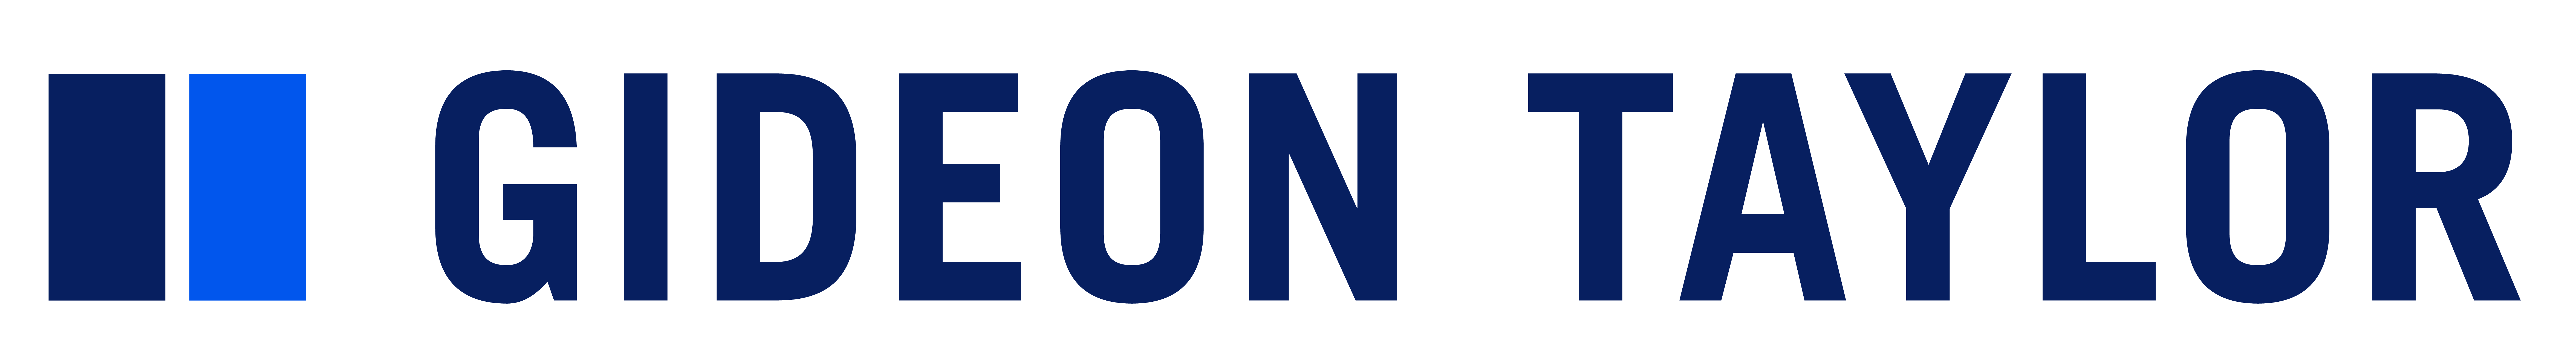 Gideon Taylor logo